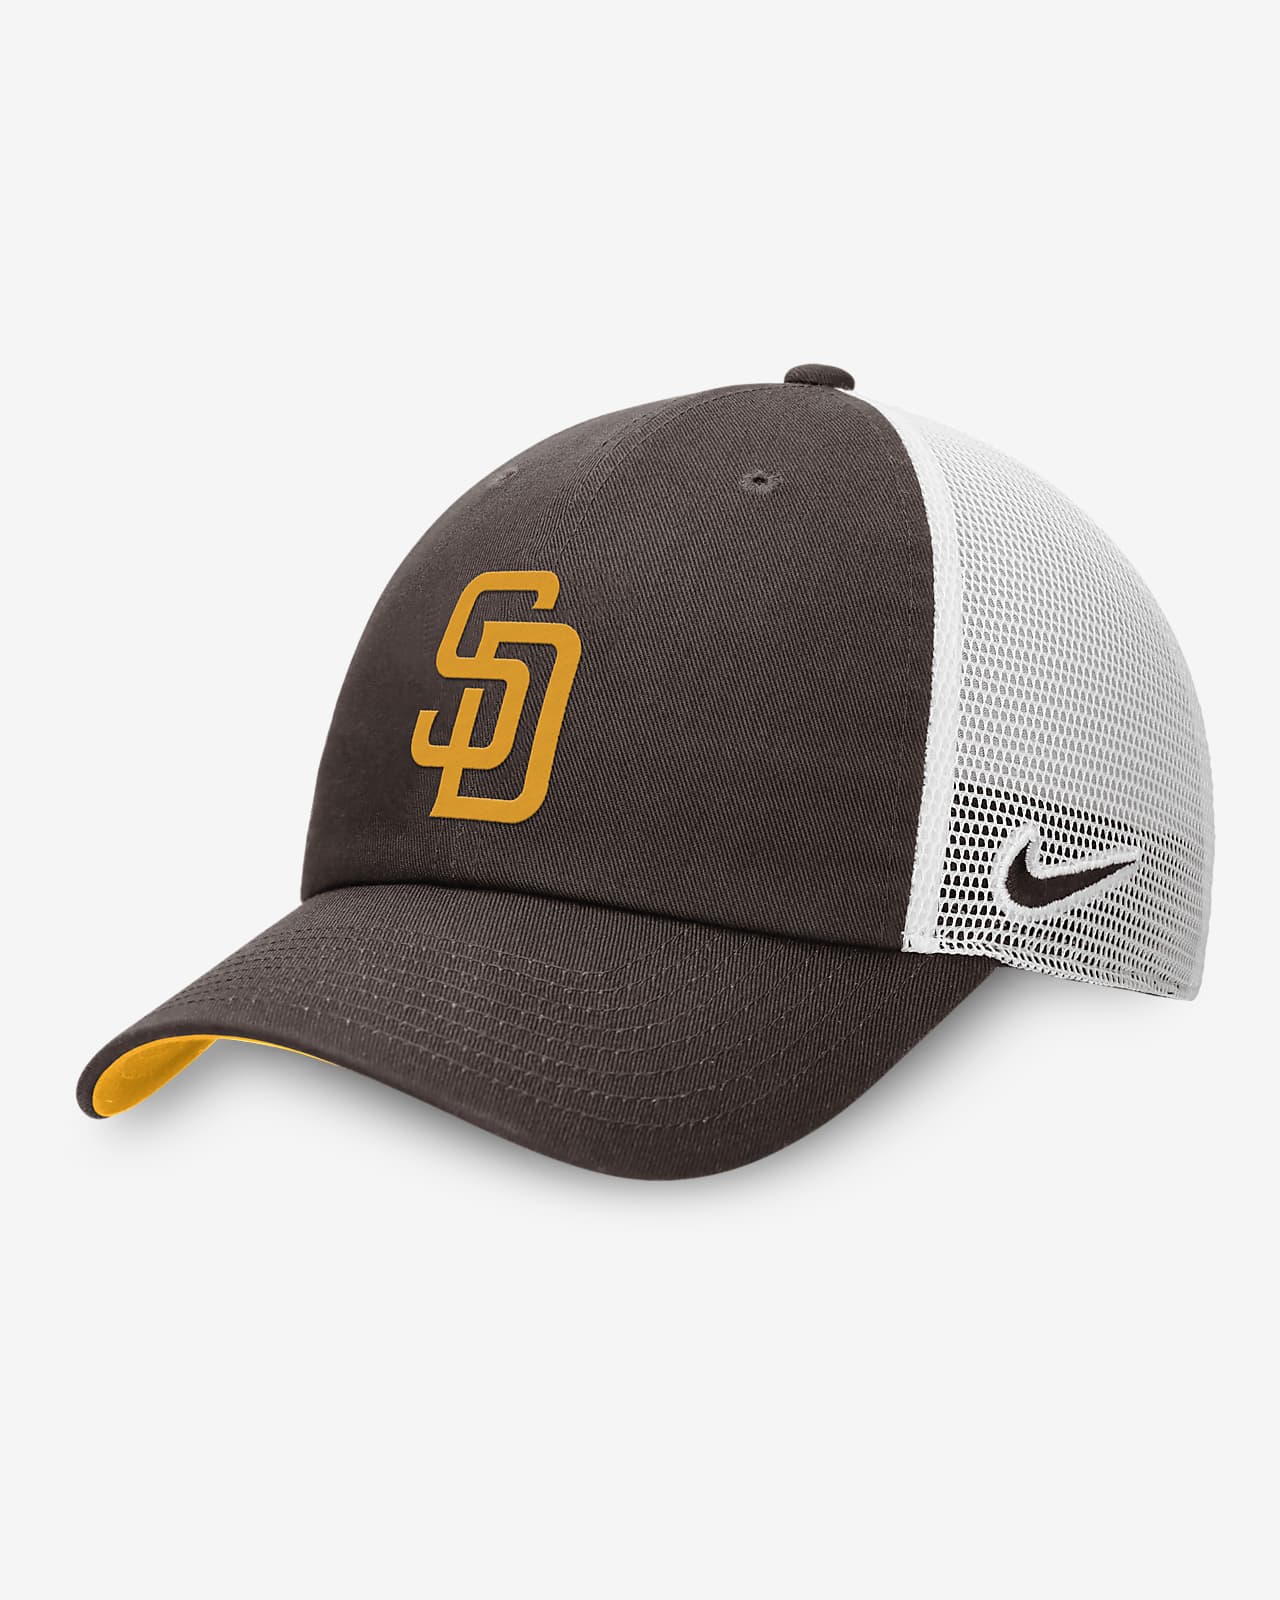 San Diego Padres Heritage86 Men's Nike MLB Trucker Adjustable Hat.